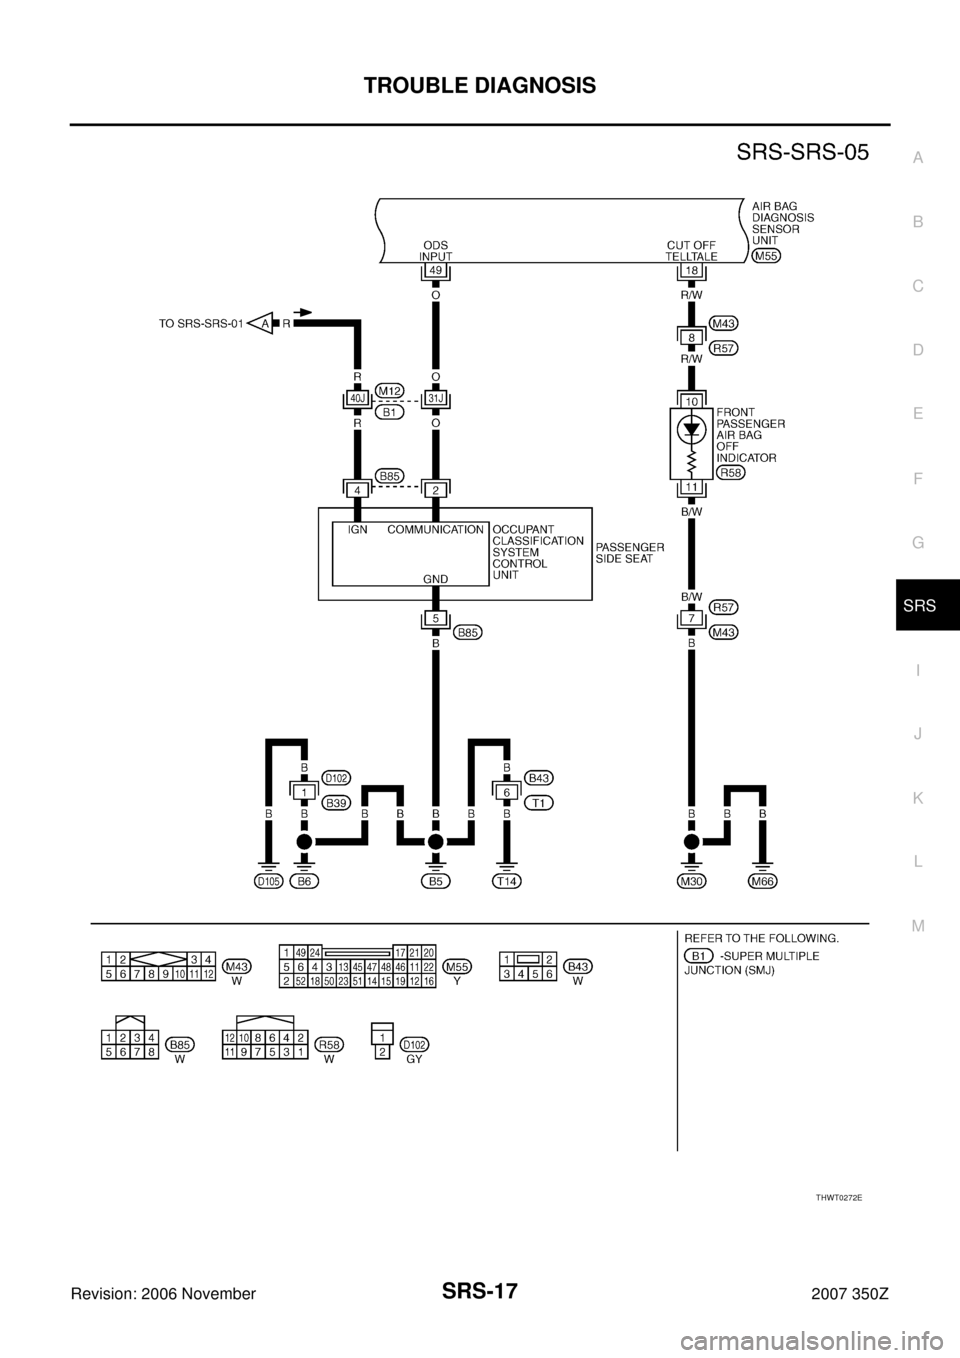 NISSAN 350Z 2007 Z33 Supplemental Restraint System User Guide TROUBLE DIAGNOSIS
SRS-17
C
D
E
F
G
I
J
K
L
MA
B
SRS
Revision: 2006 November2007 350Z
THWT0272E 